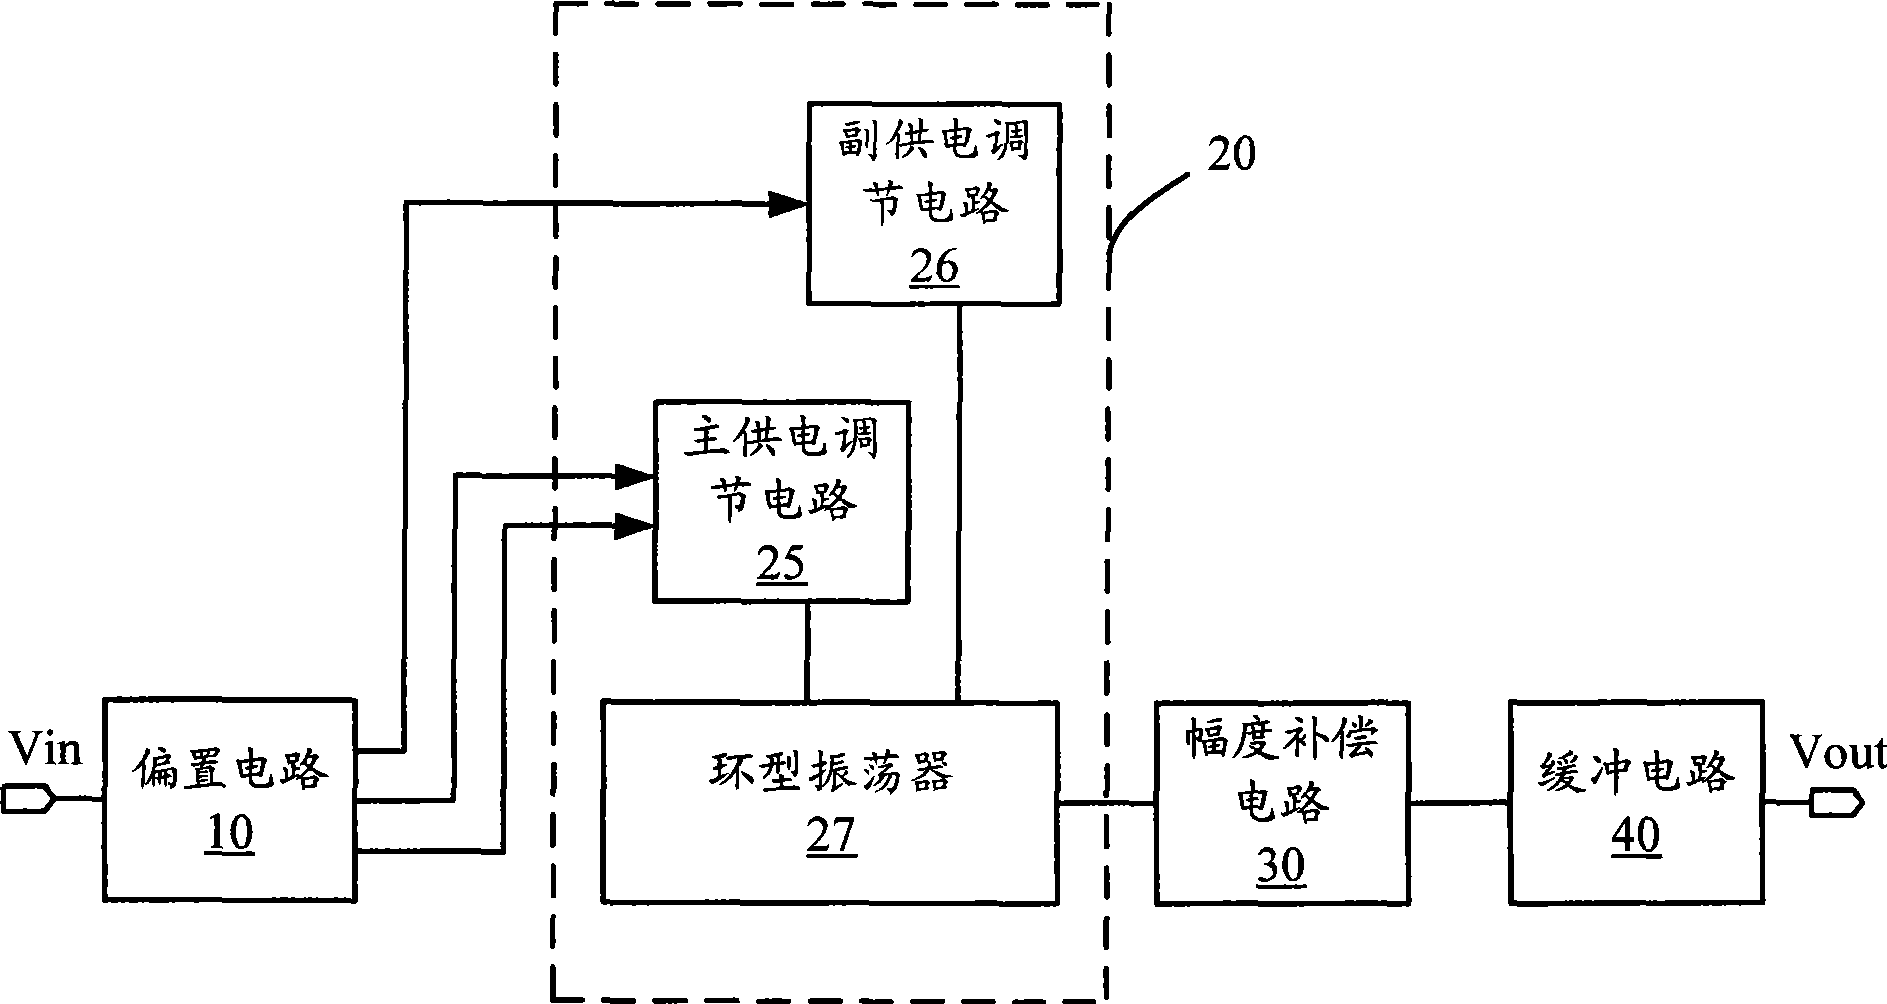 Voltage controlled oscillator